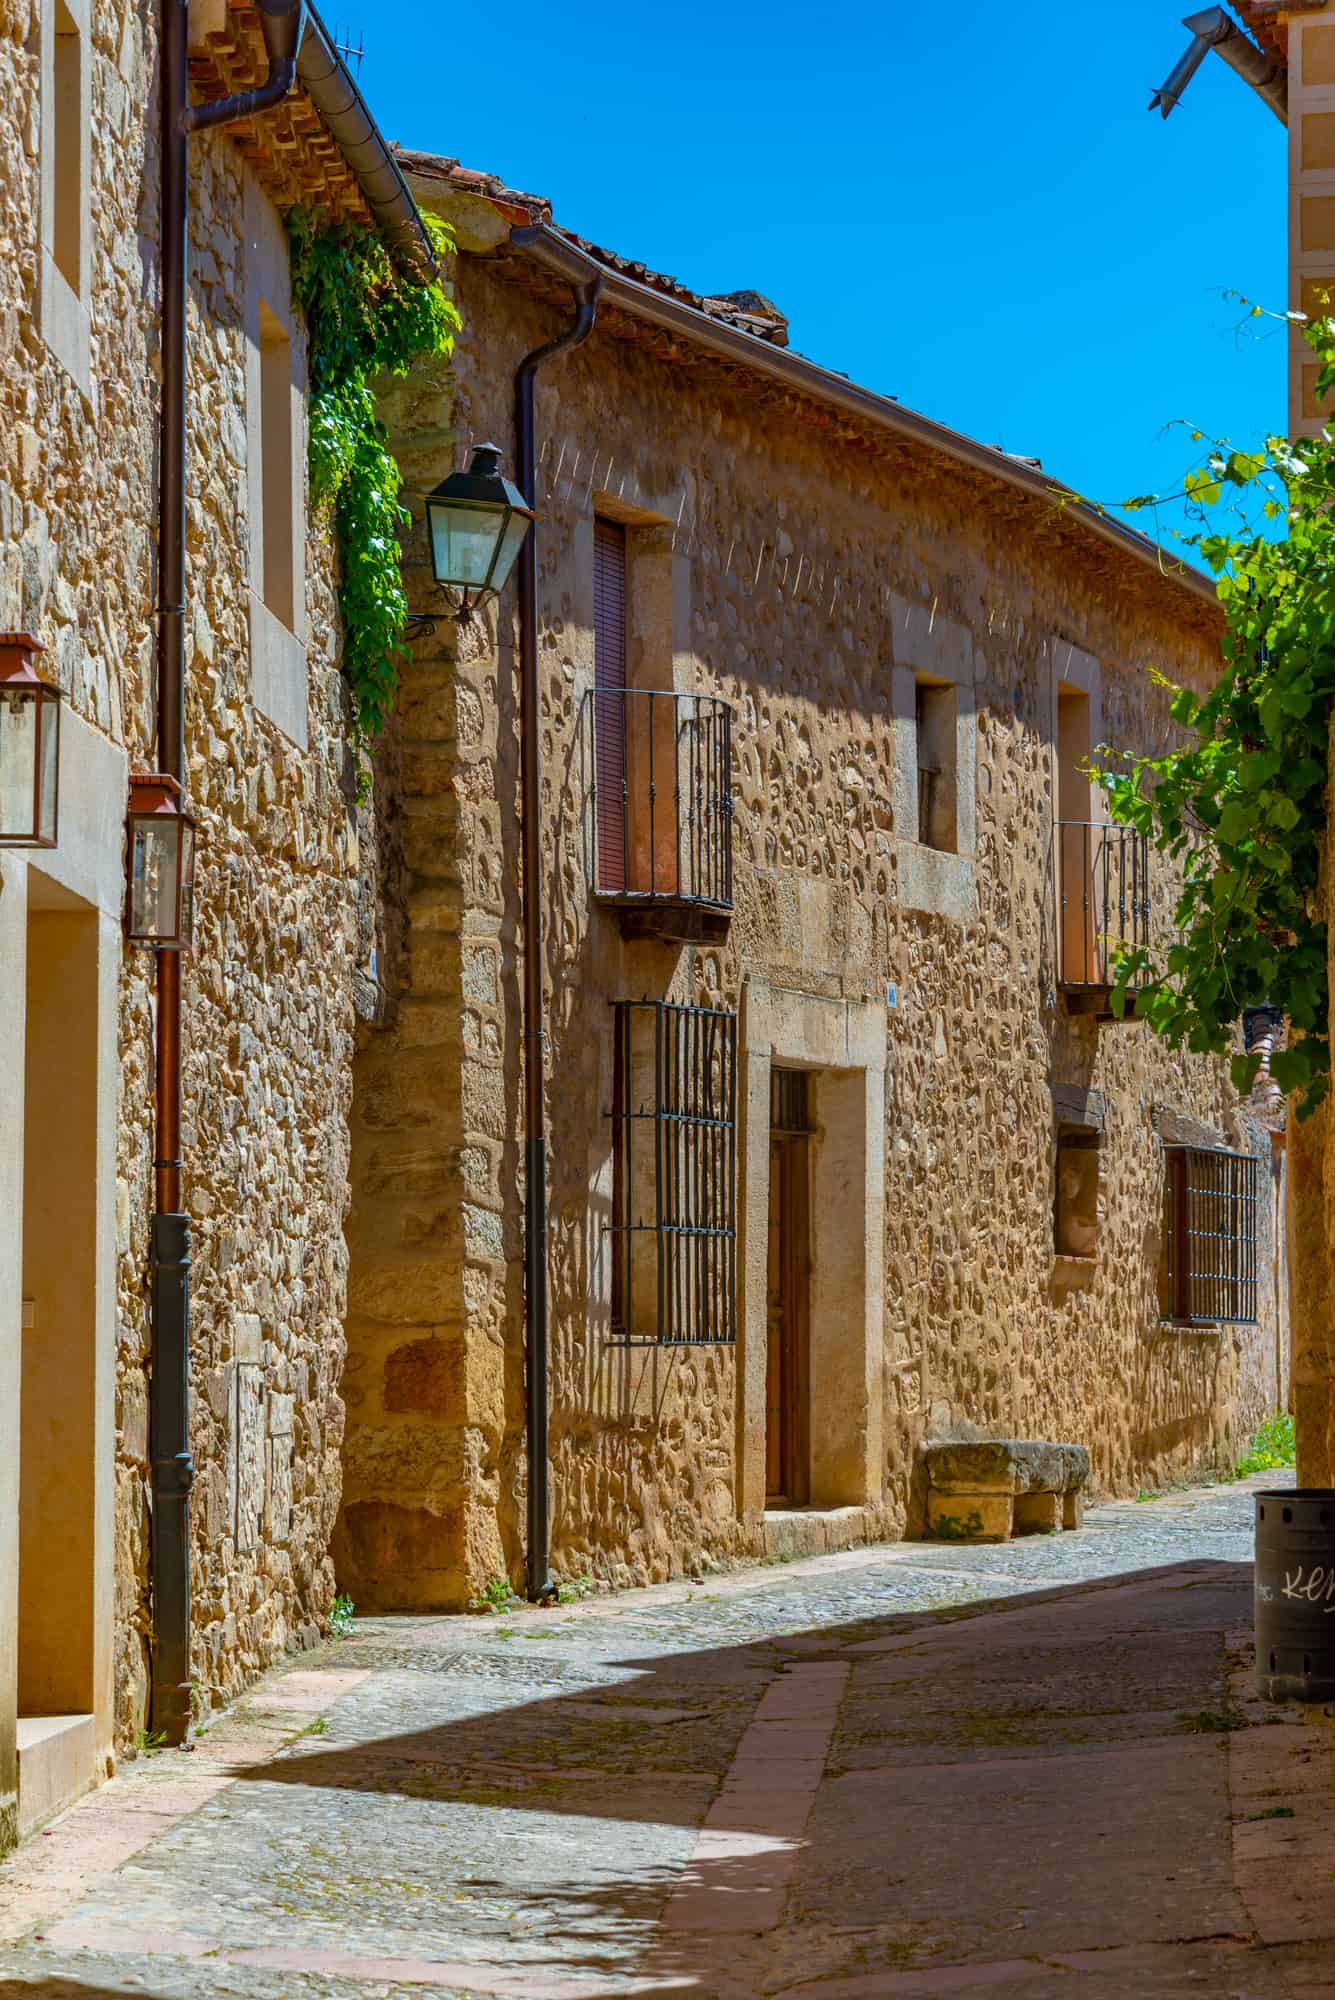 Narrow street in medieval village Pedraza in Spain